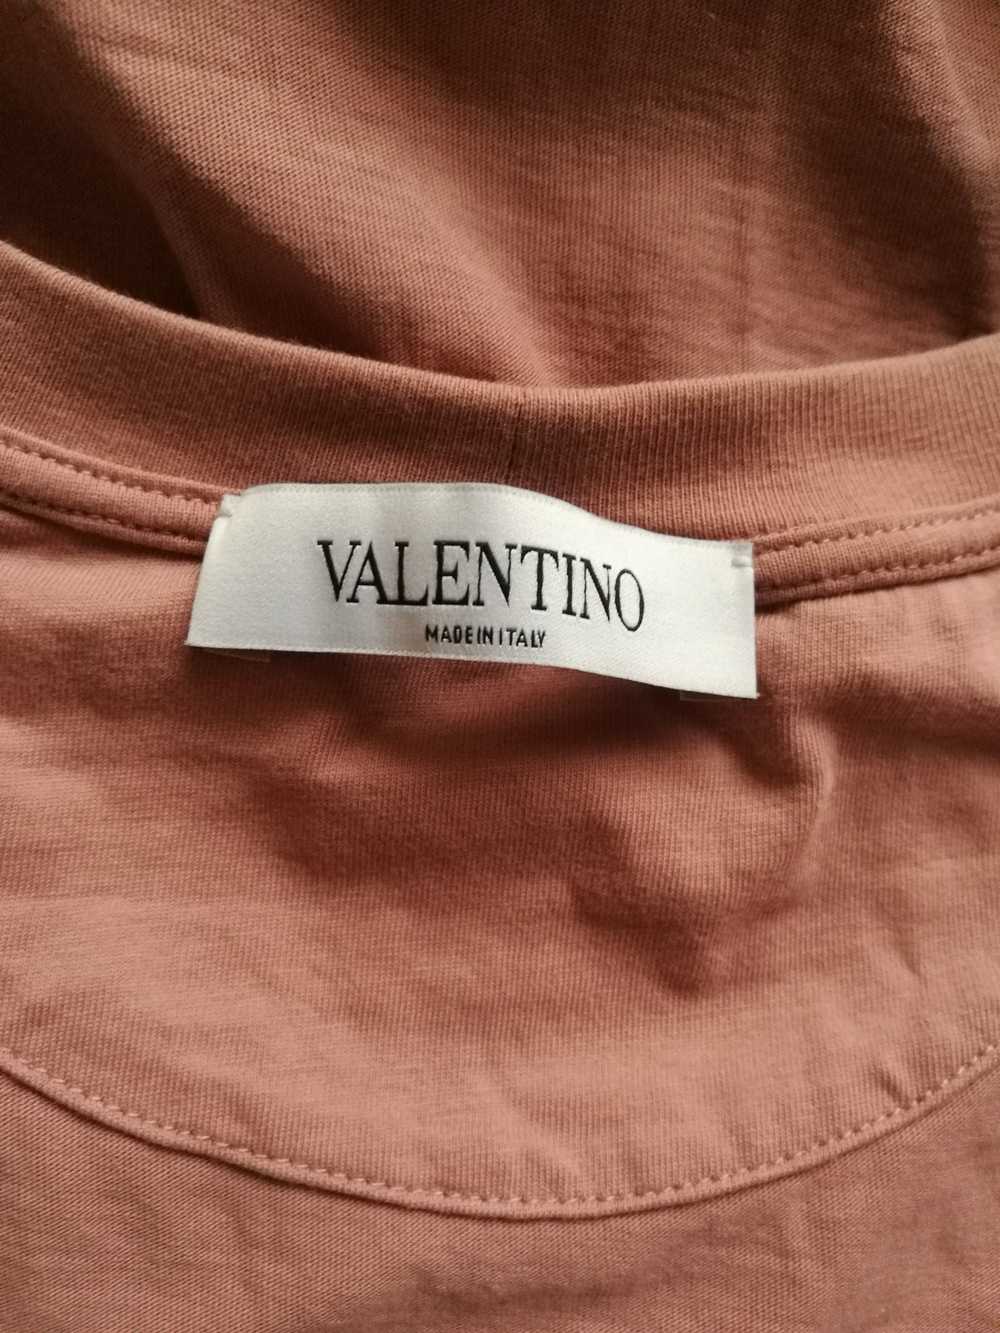 Valentino Valentino - image 4